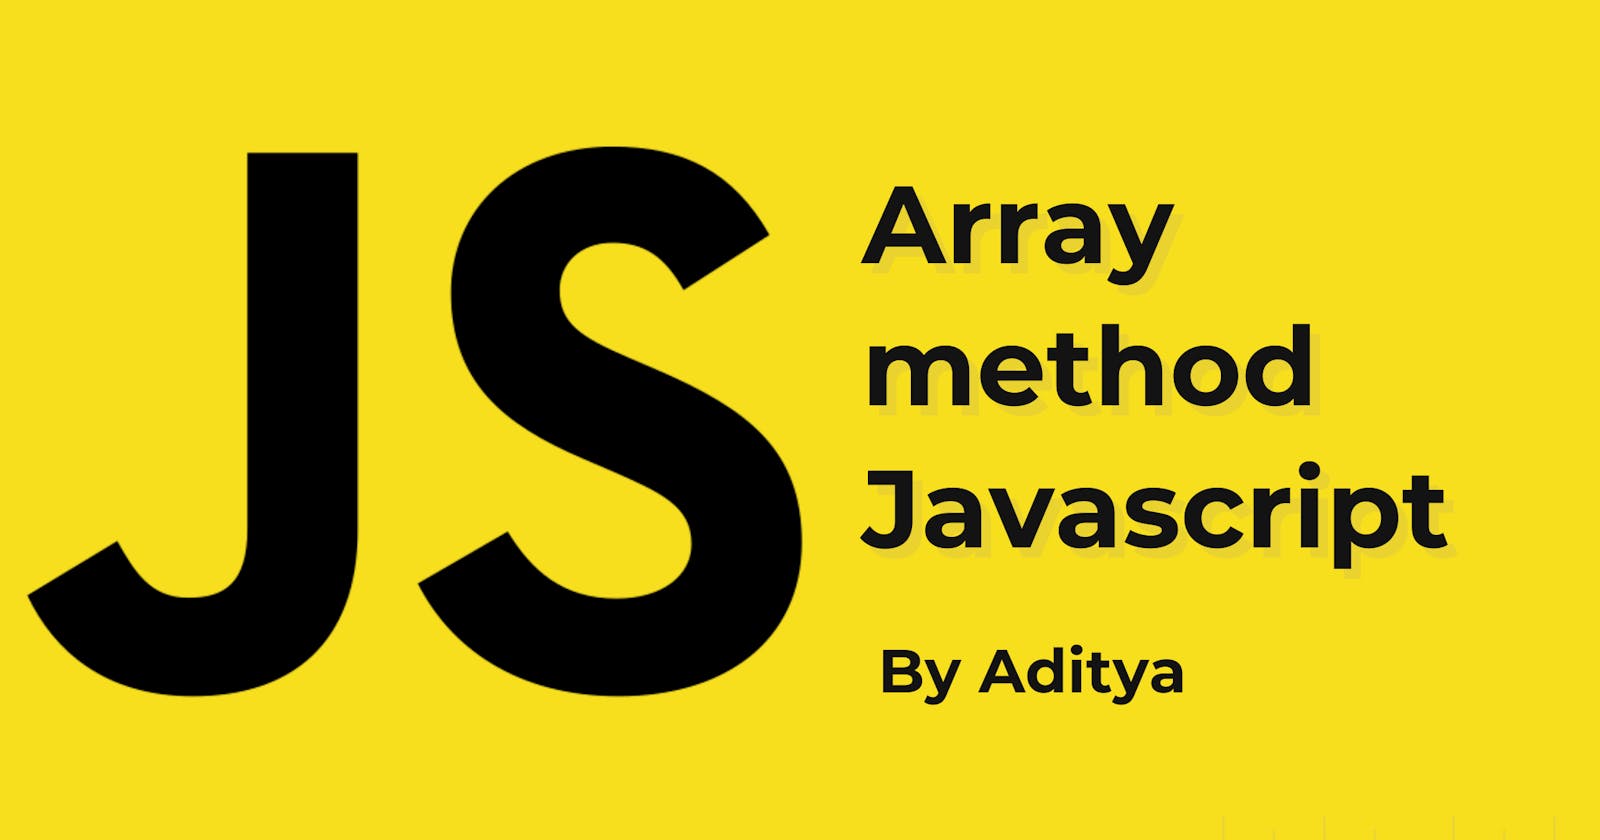 Array method in JavaScript